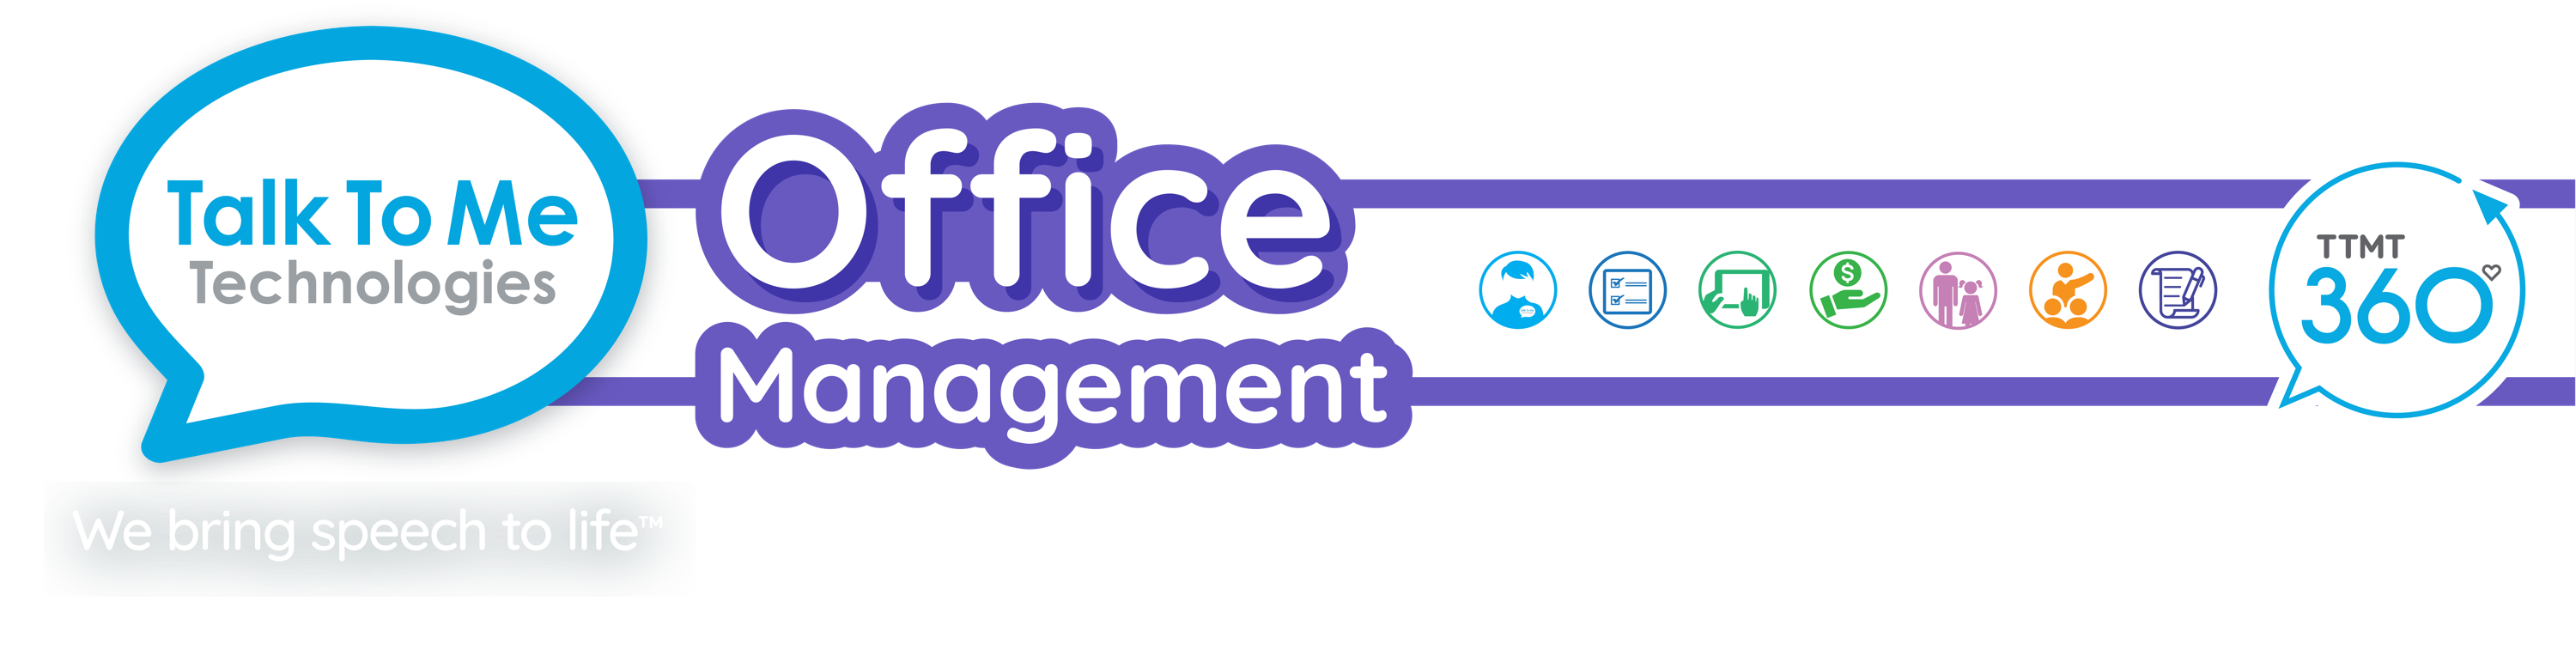 office management header